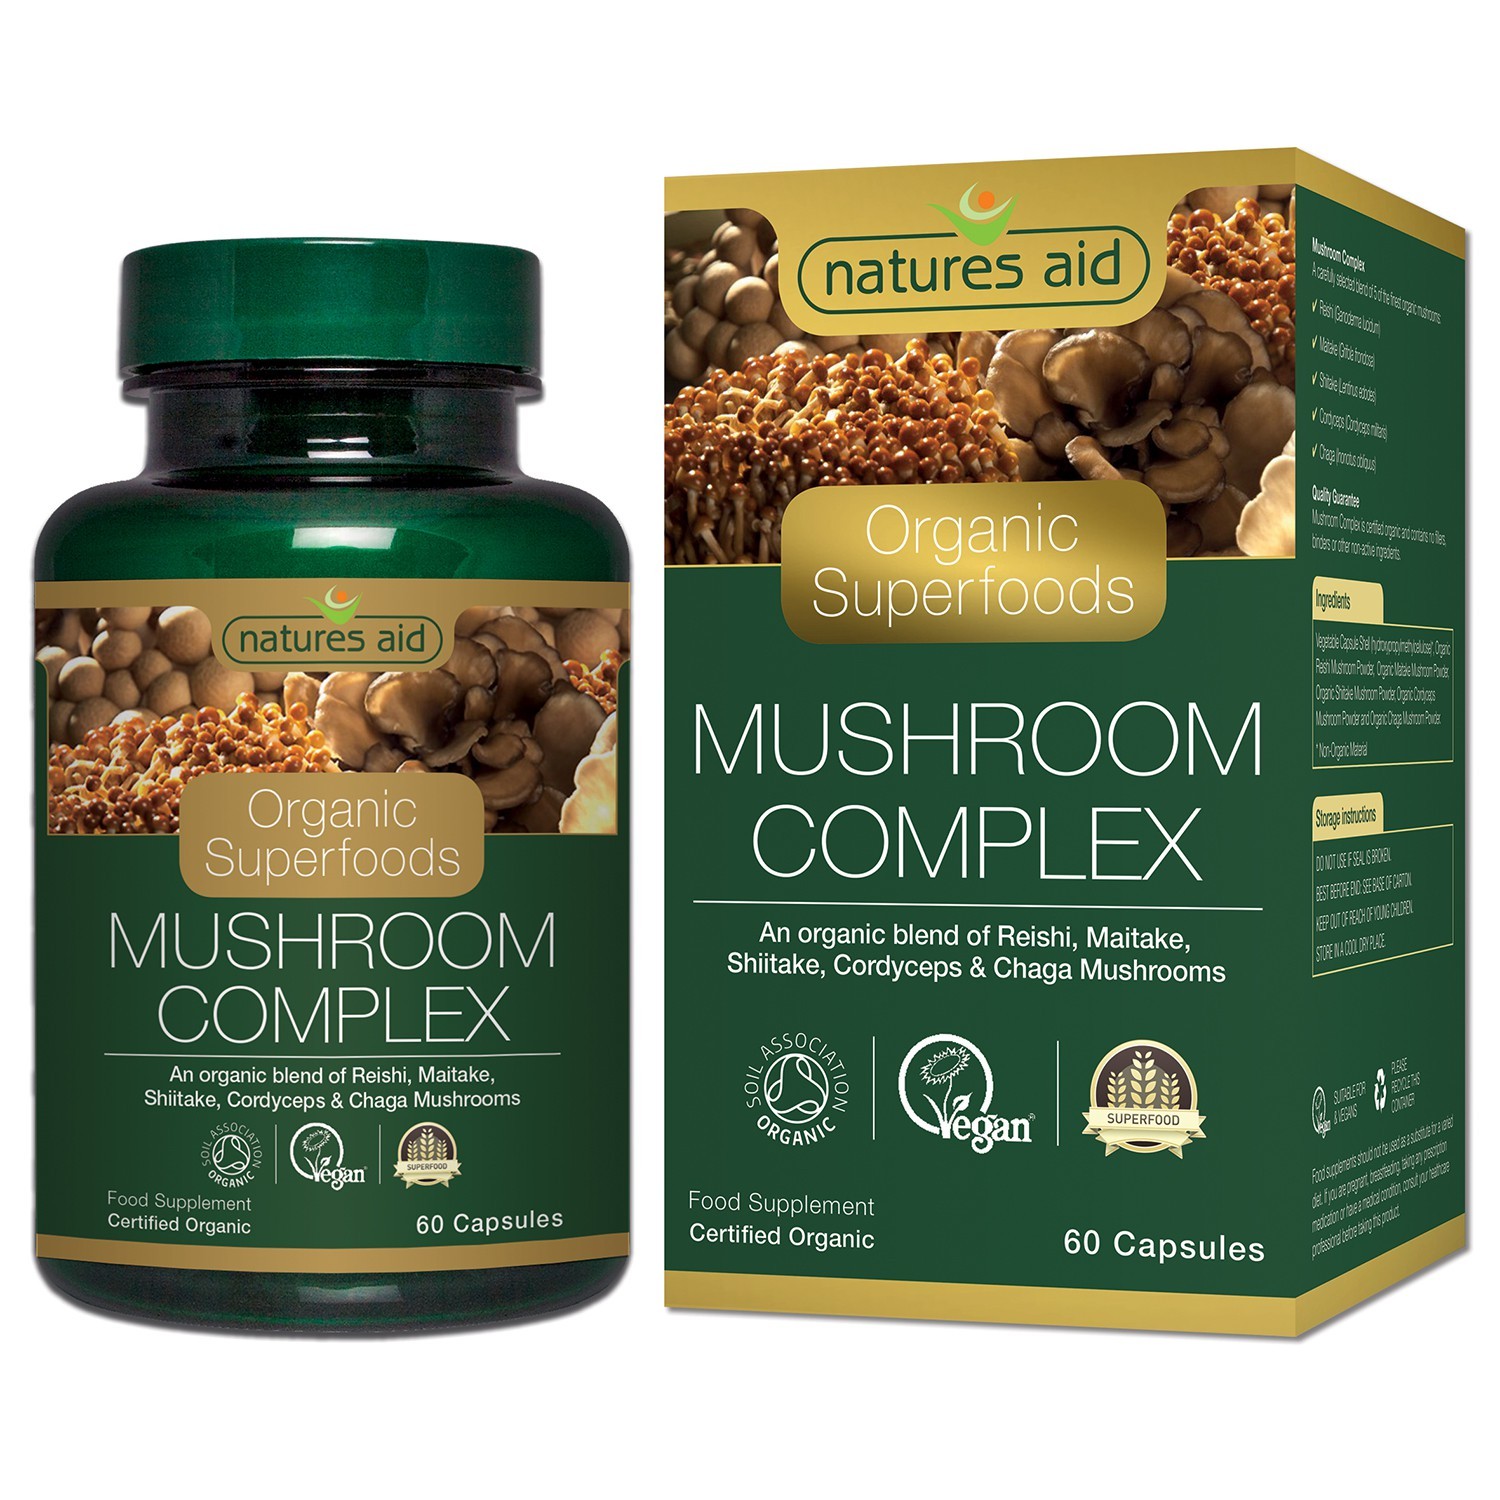 Natures Aid Organic Mushroom Complex (Reishi, Maitake, Shiitake, Cordyceps & Chaga Mushrooms)